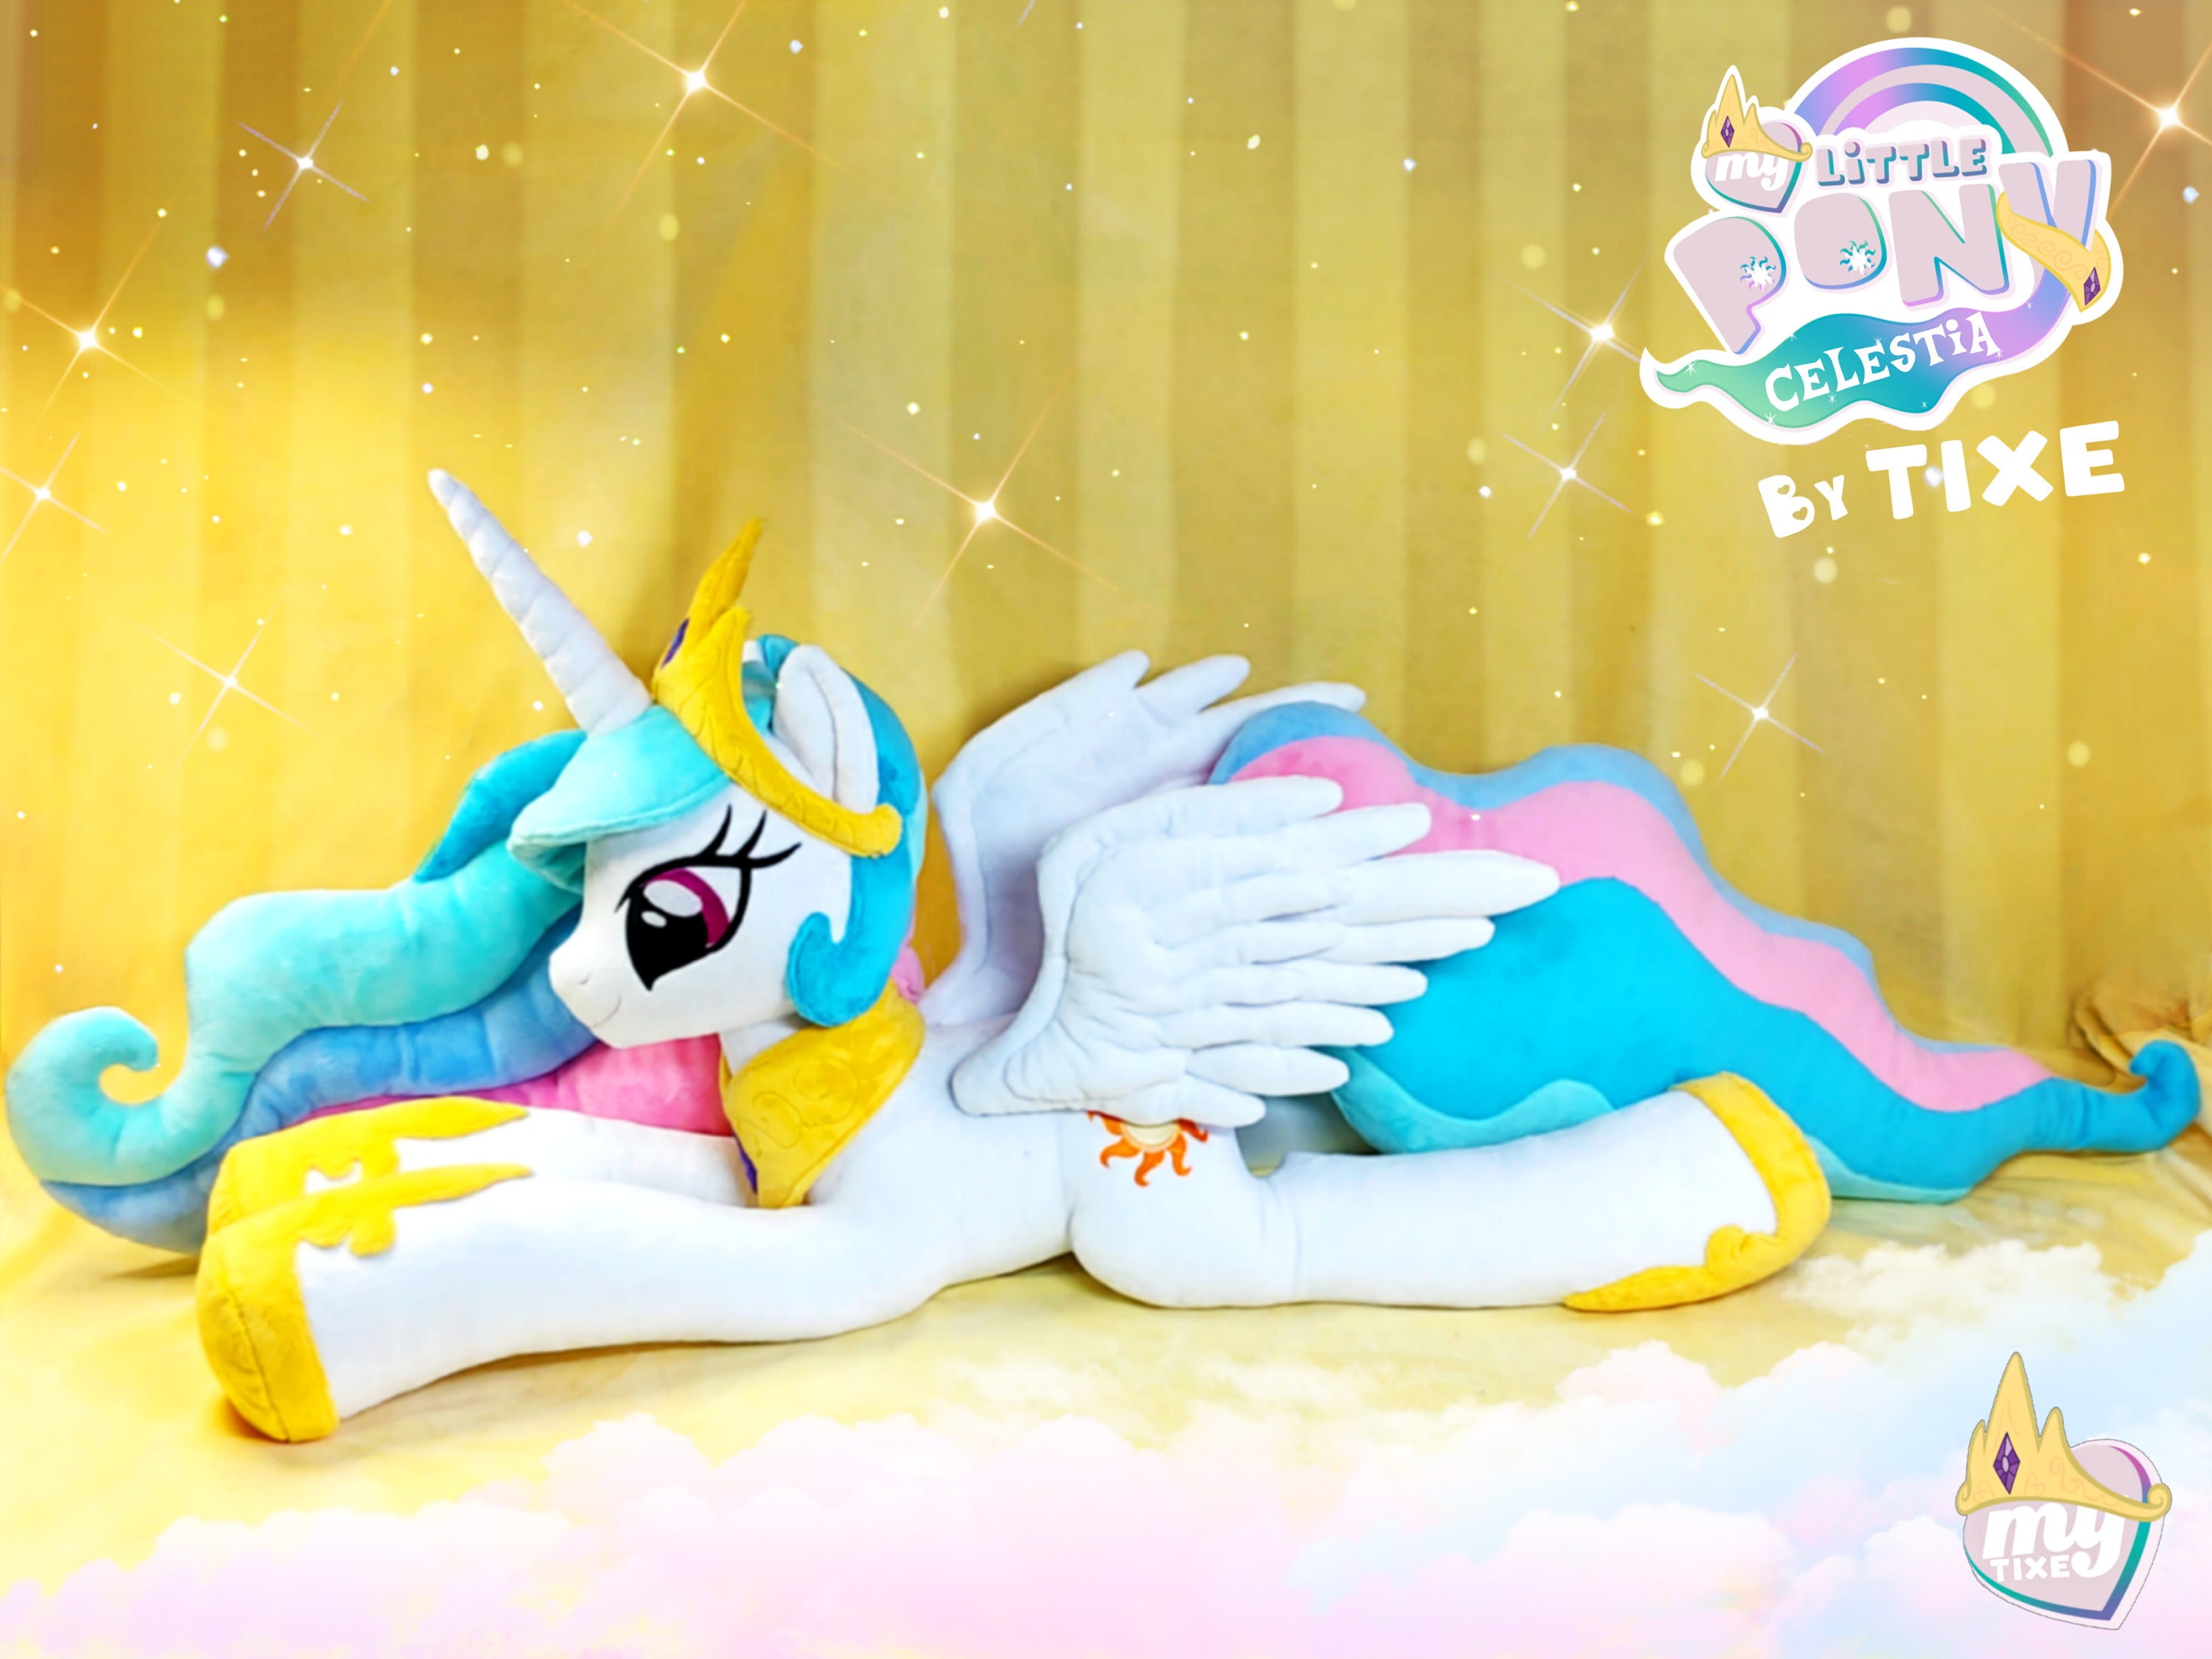 Princess Celestia With Open Wings Lifesize Plush My Little Pony Plush 